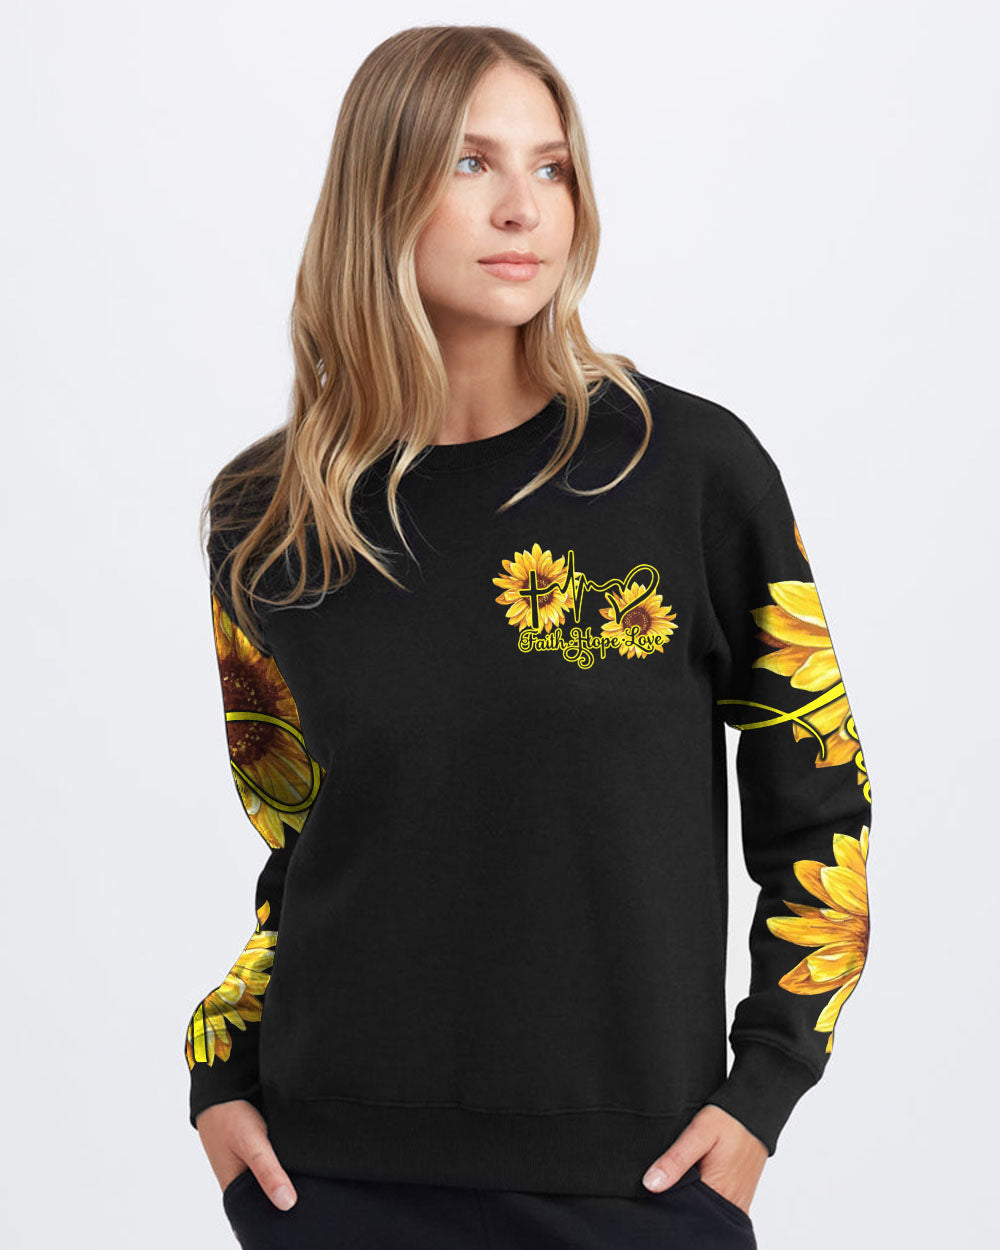 God Says You Are Sunflower Women's Christian Sweatshirt